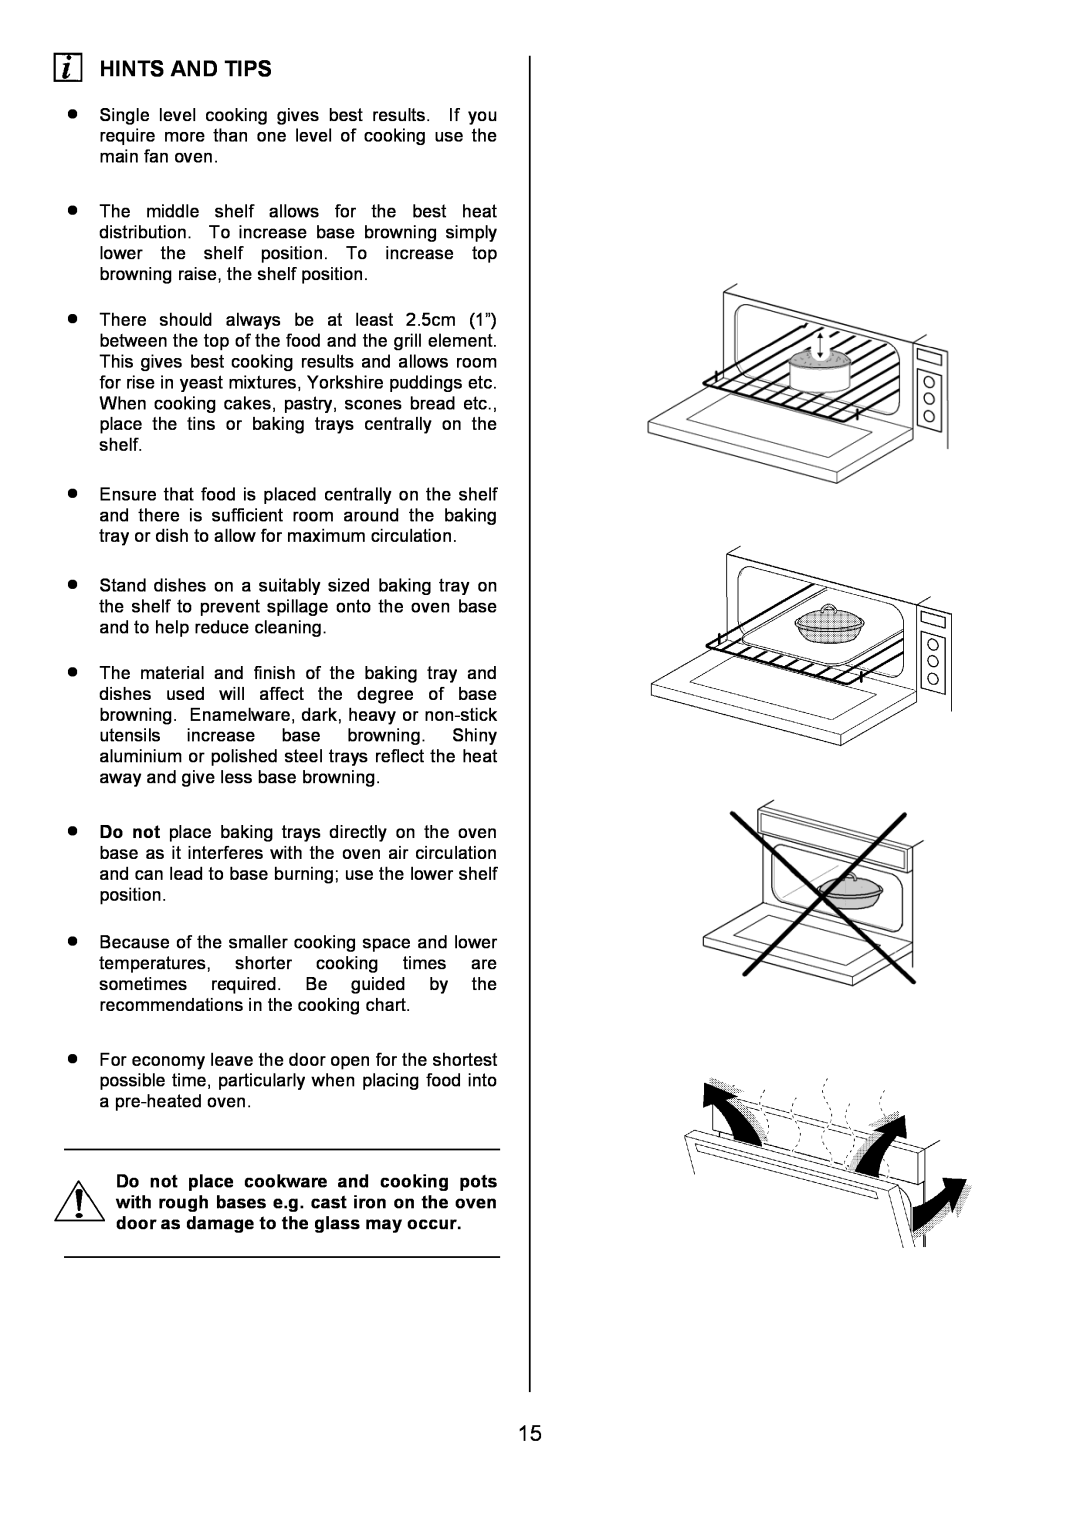 AEG U3100-4 manual Hints And Tips 